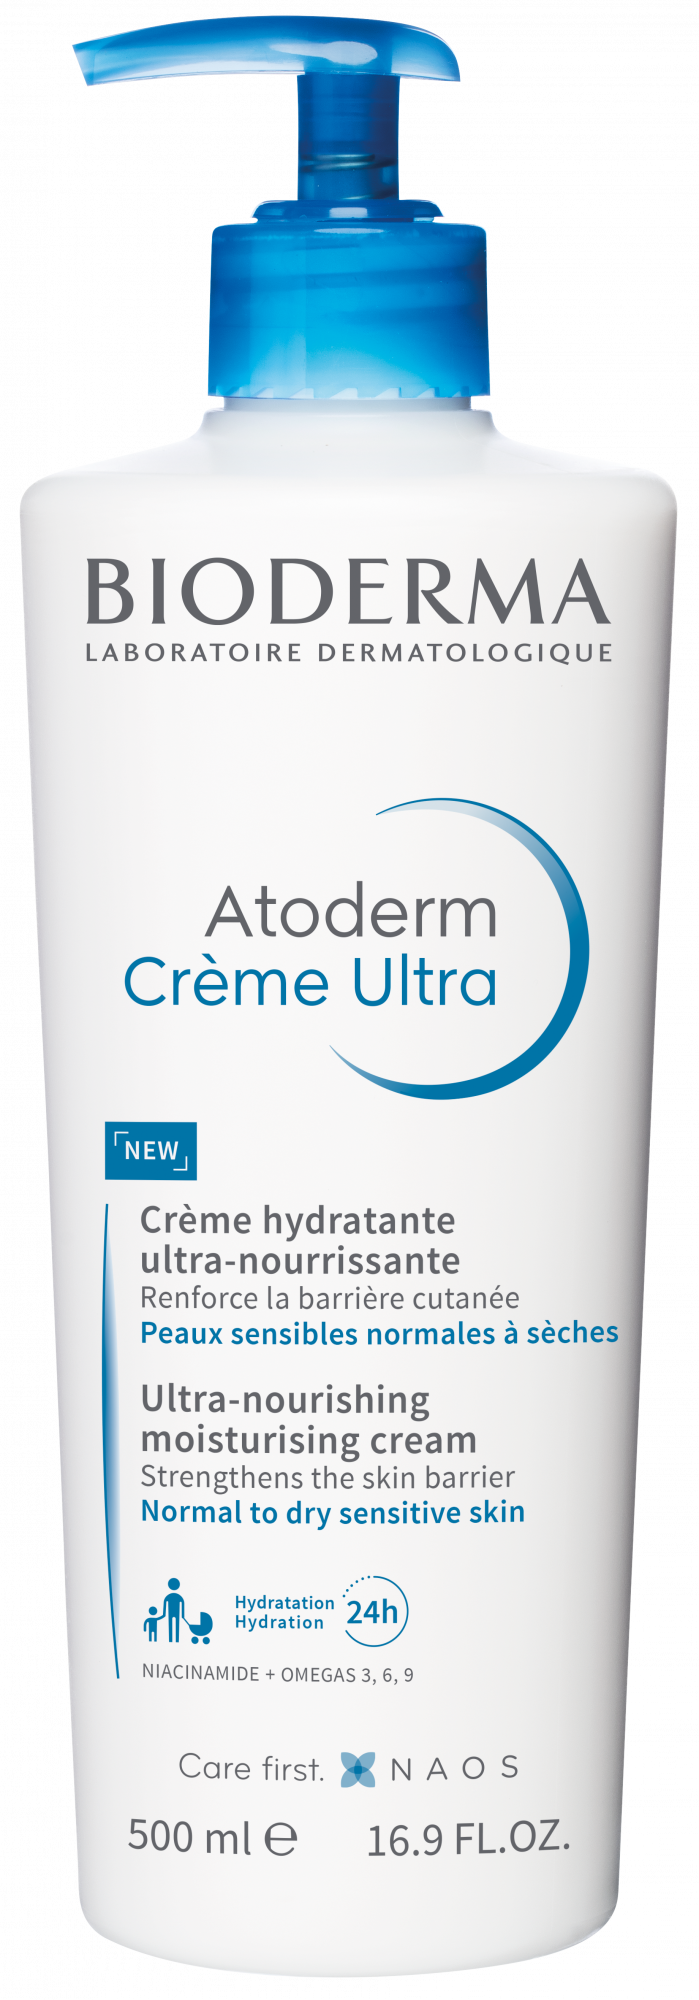 Bioderma Atoderm Crème Ultra 500 ml